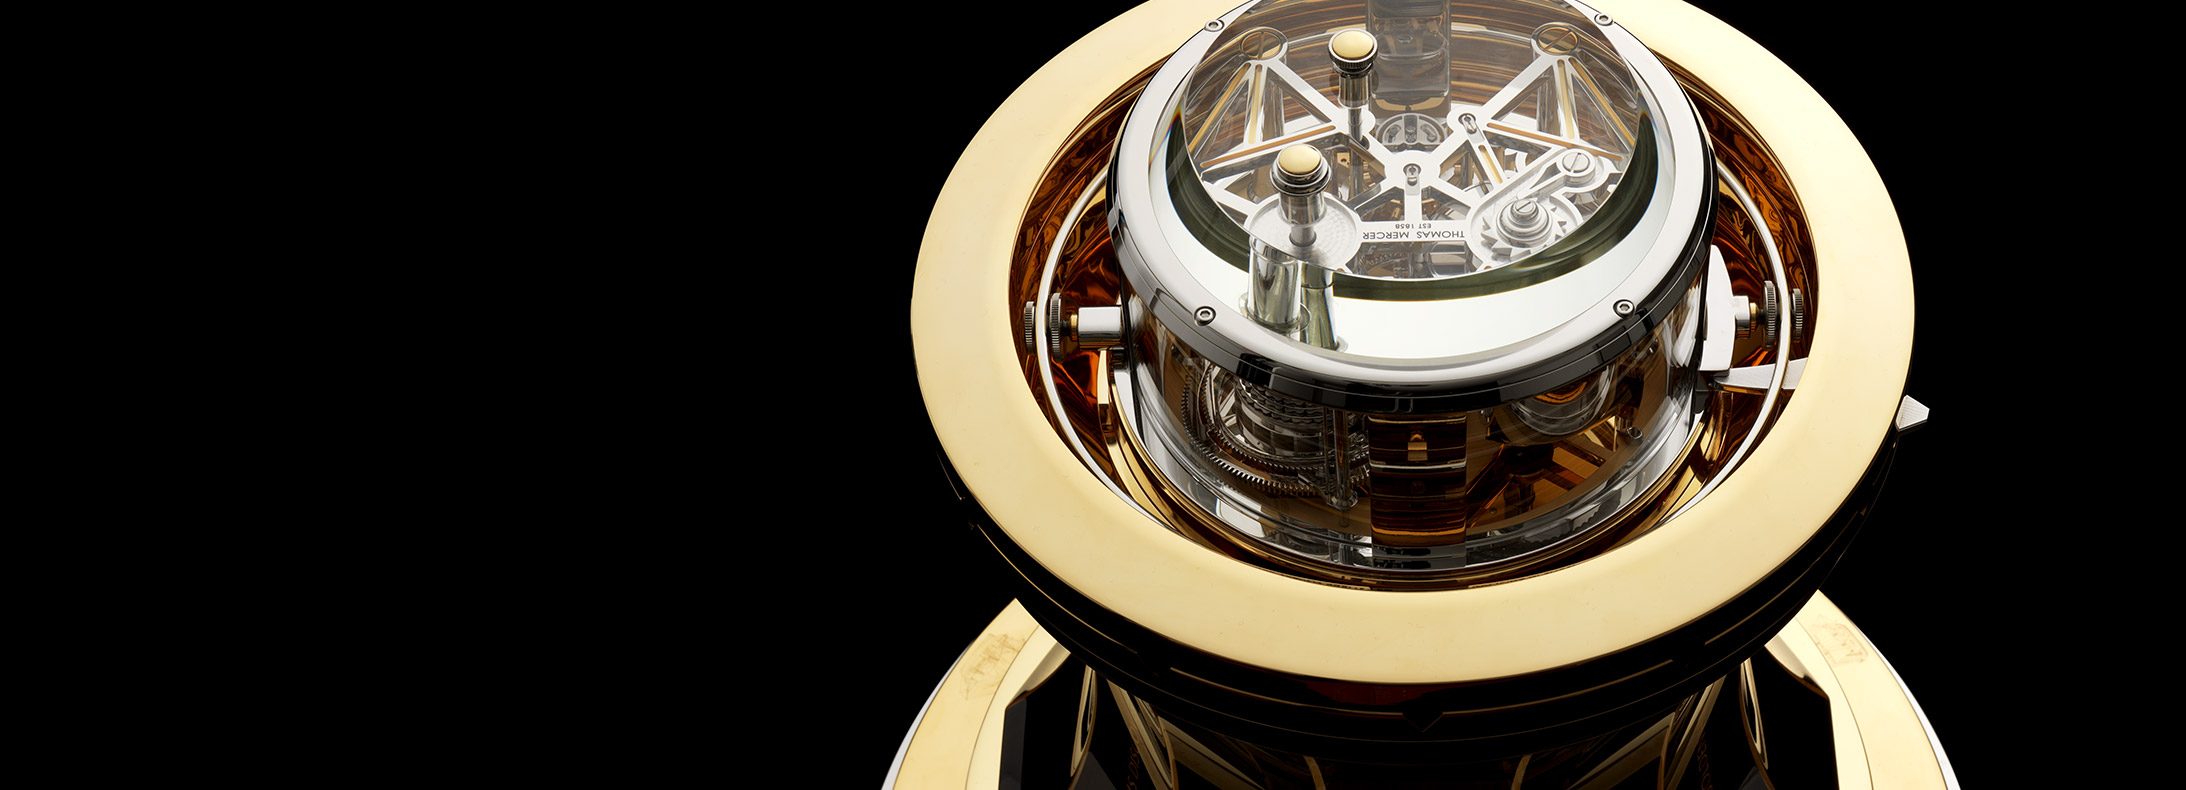 Regulator Clocks for London luxury interior designers